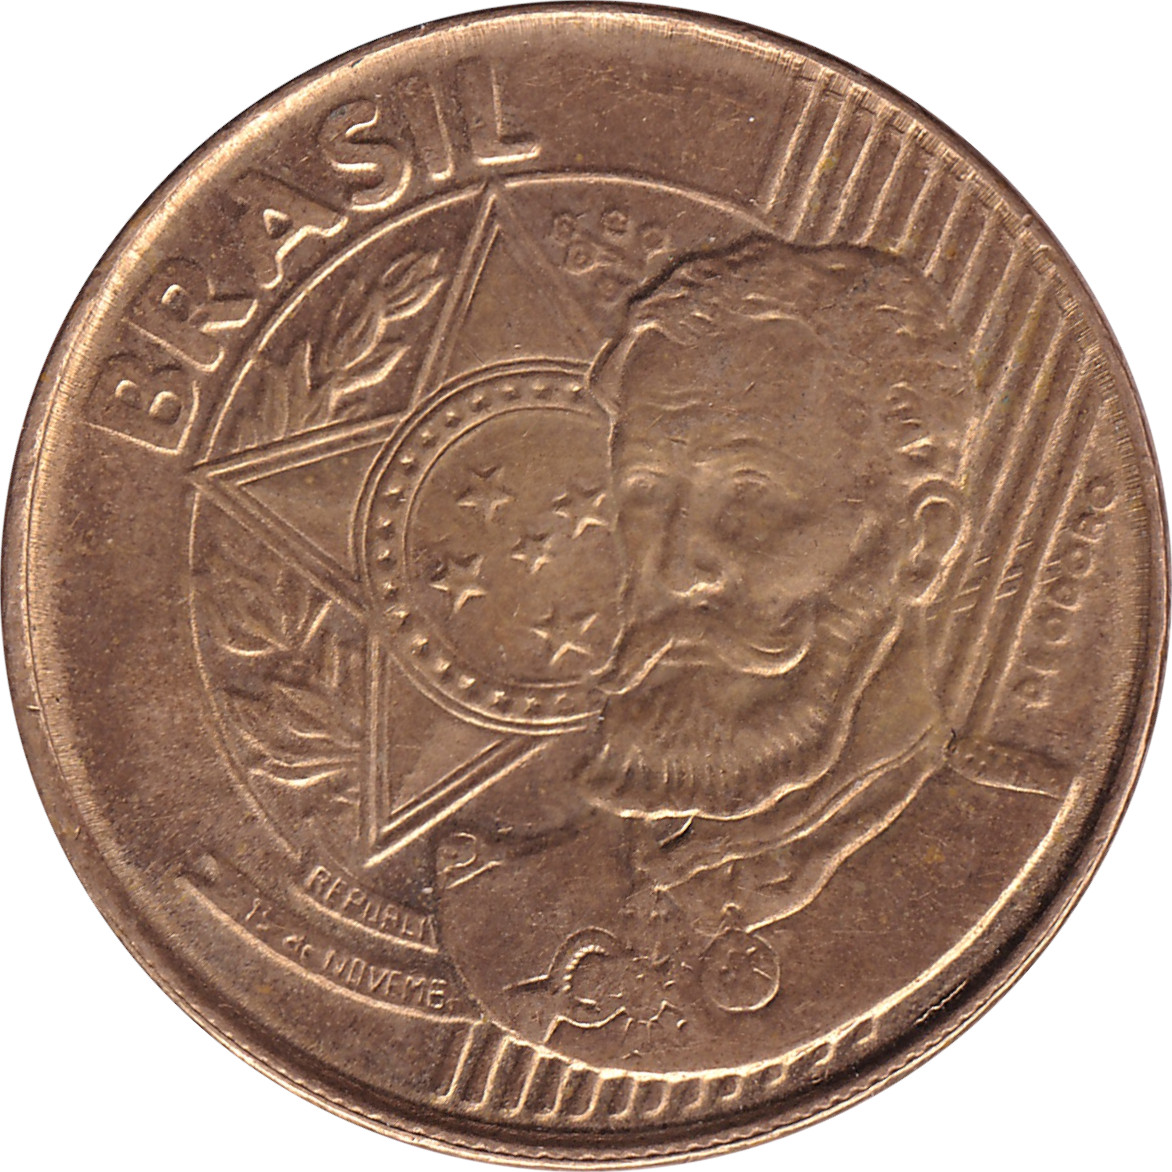 25 centavos - Deodoro da Fonseca